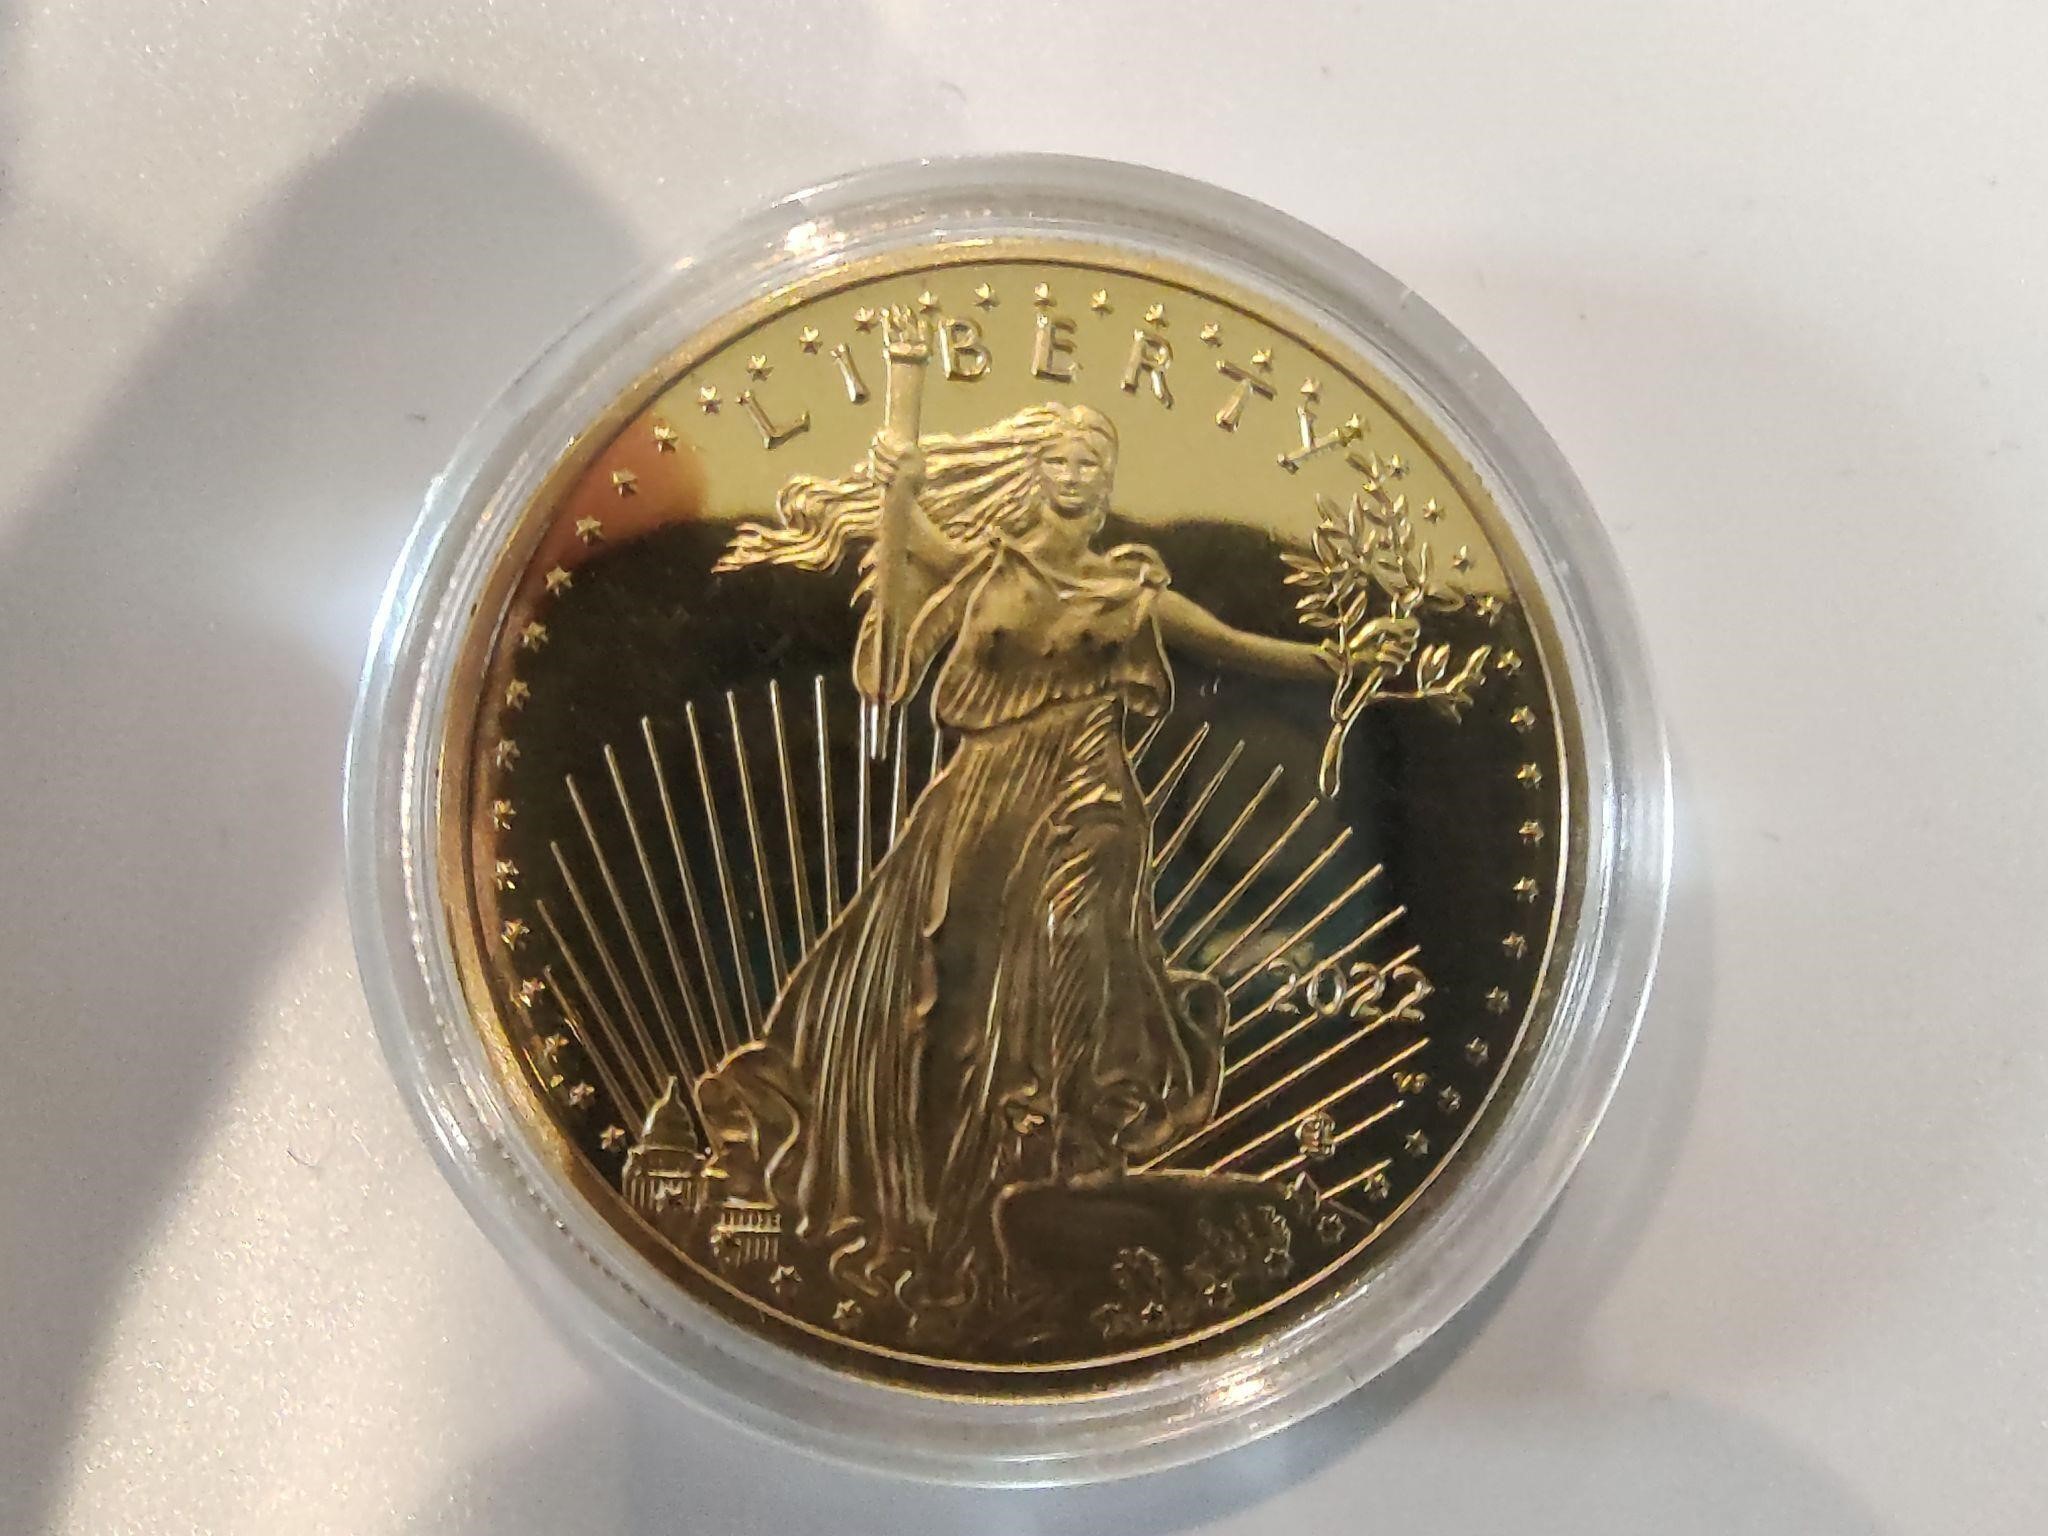 1 OZ Fine Gold $50.00 Coin (Copy)